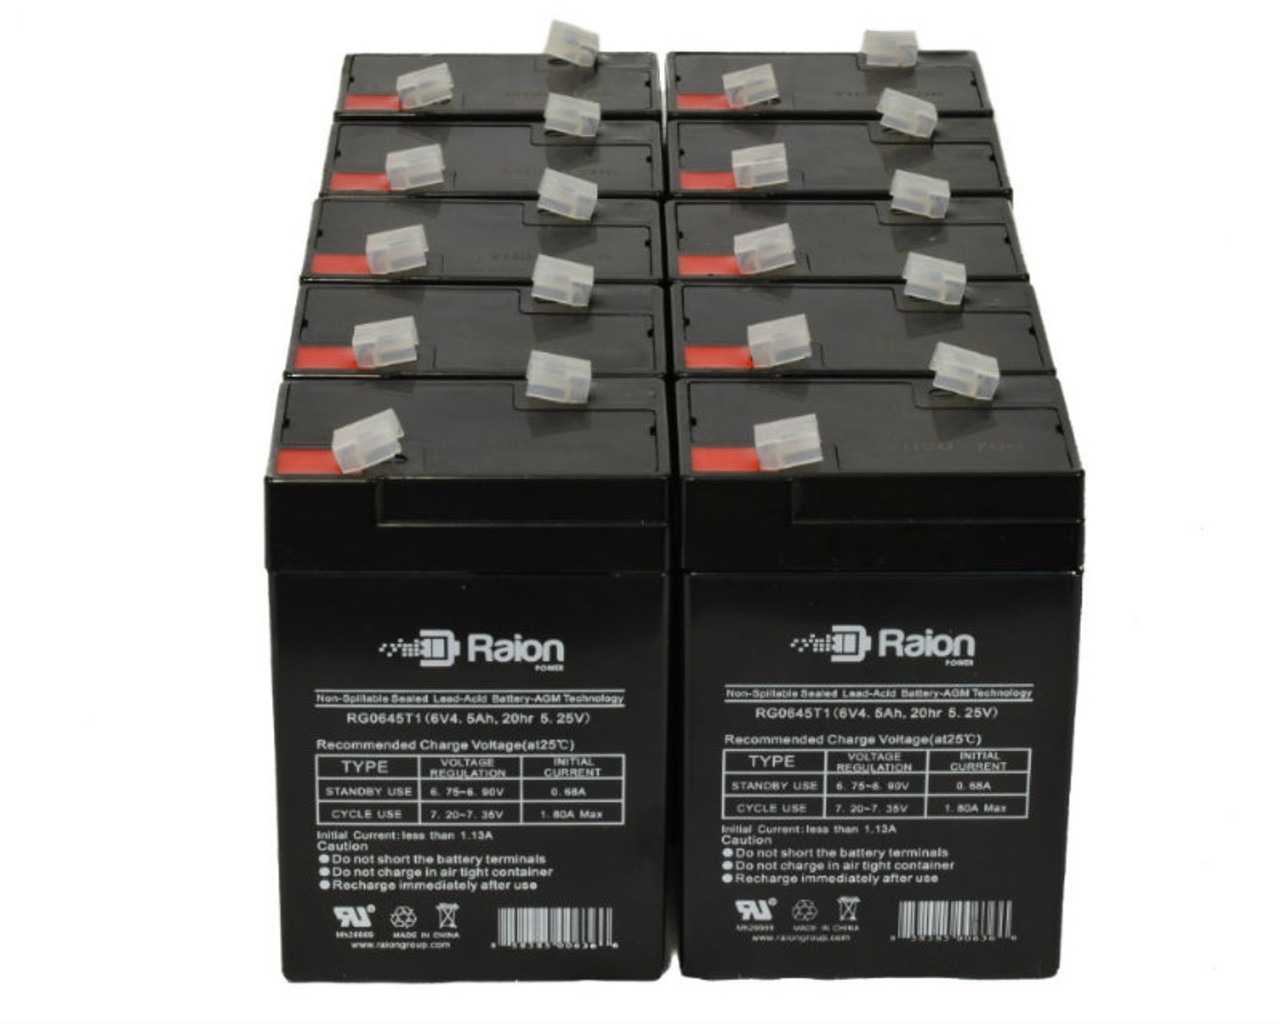 Raion Power 6V 4.5Ah Replacement Emergency Light Battery for JohnLite 350 - 10 Pack